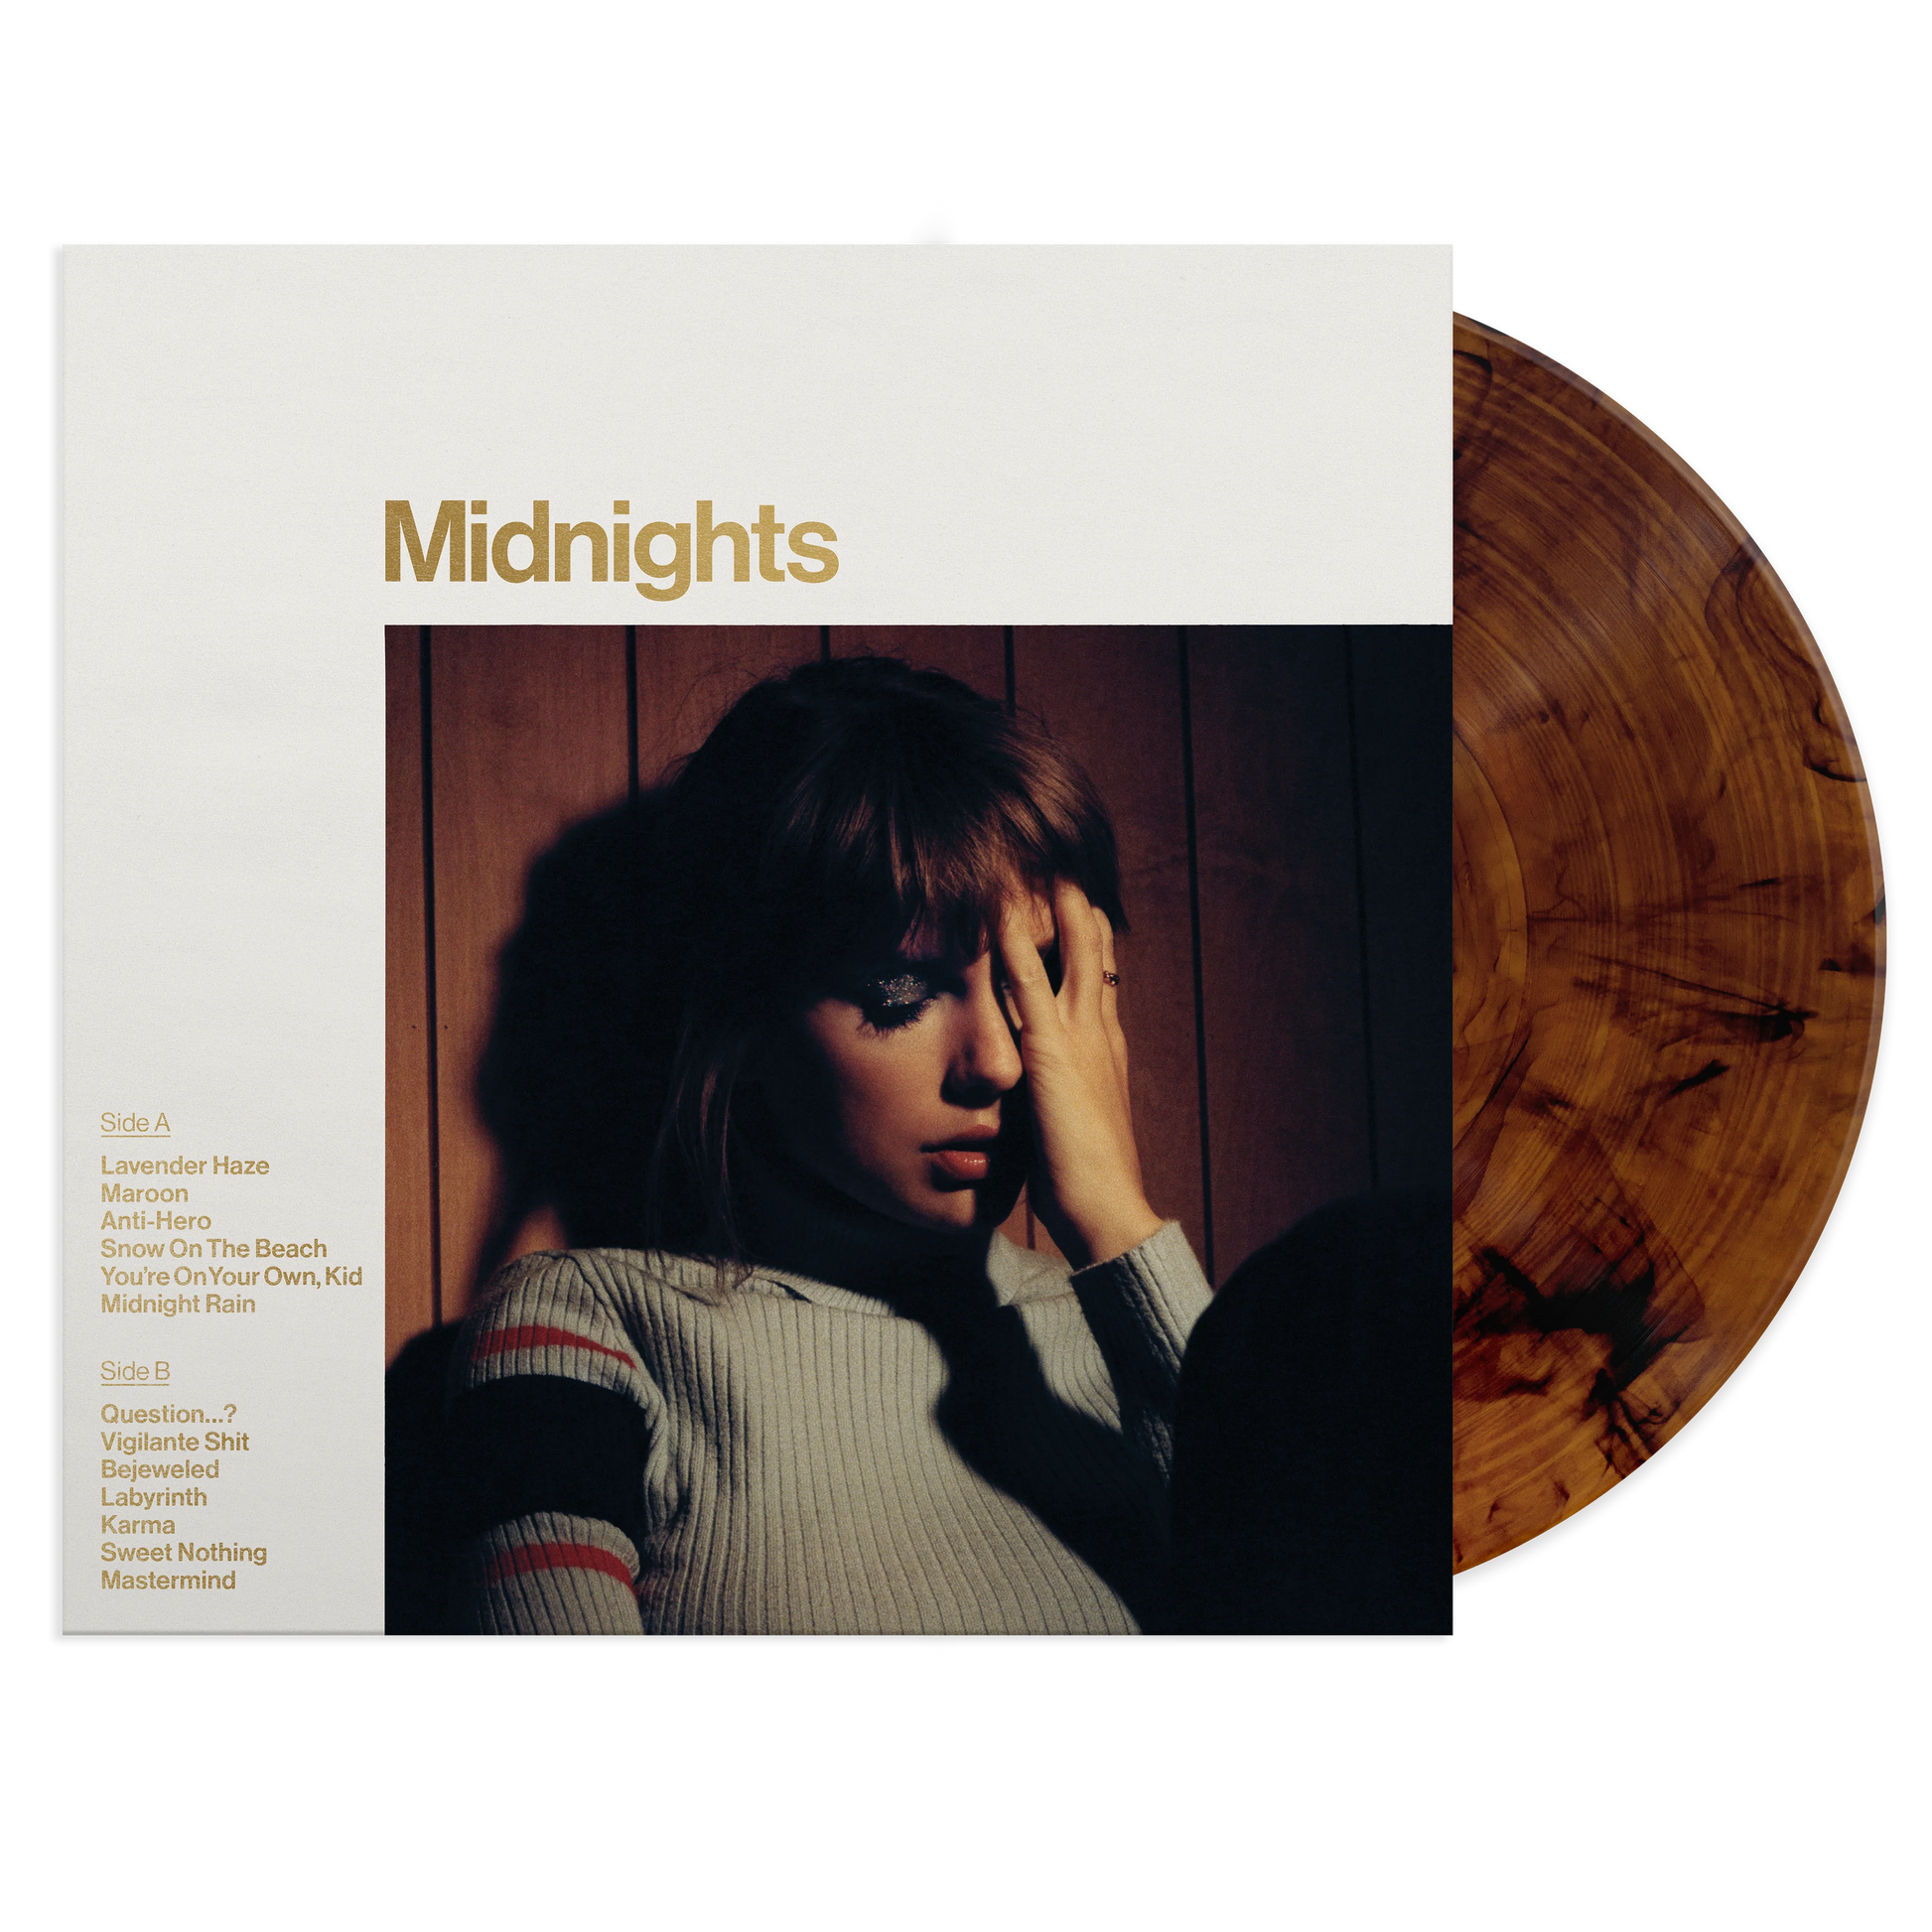 Taylor Swift Midnights Album On Mahogany Brown Marbled Version Limited Edition Vinyl LP Record Variant